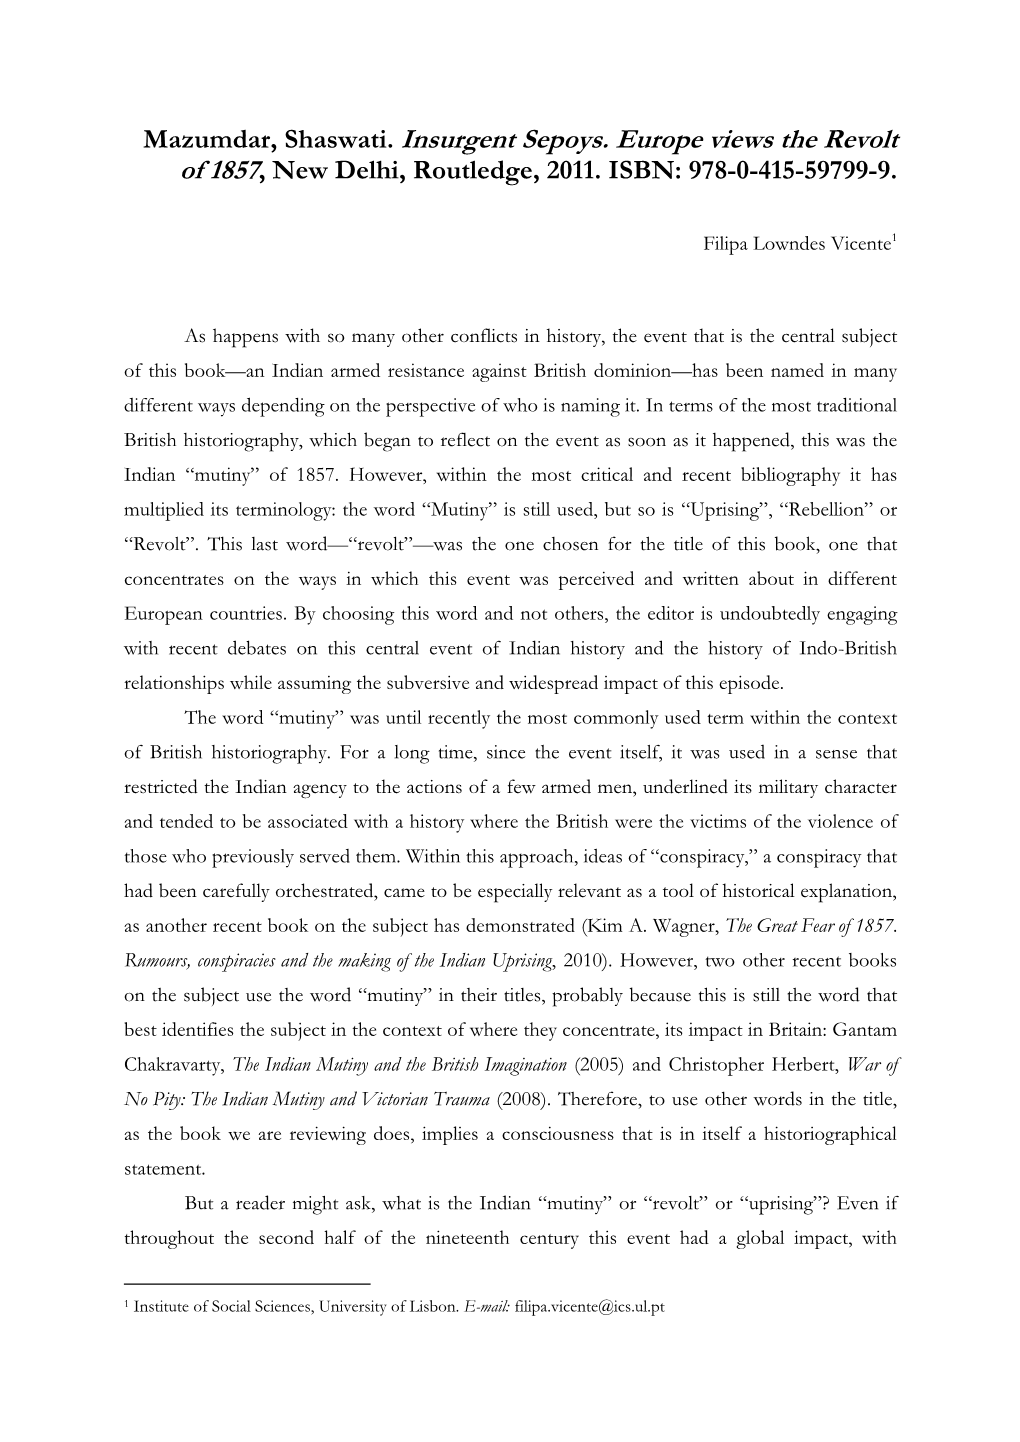 Mazumdar, Shaswati. Insurgent Sepoys. Europe Views the Revolt of 1857, New Delhi, Routledge, 2011